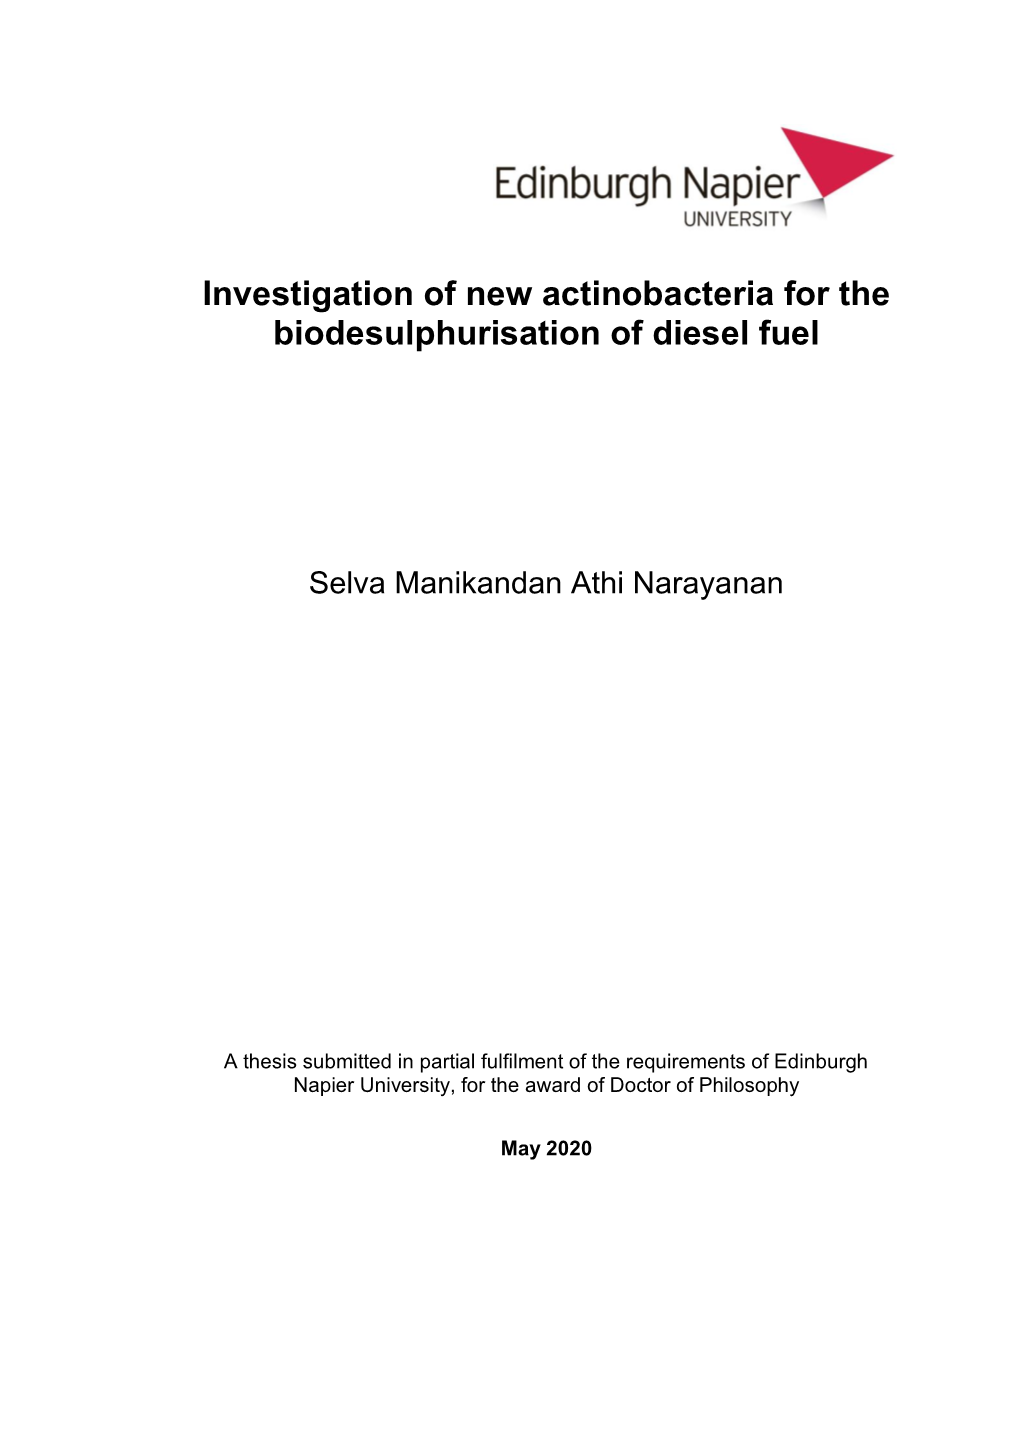 Investigation of New Actinobacteria for the Biodesulphurisation of Diesel Fuel